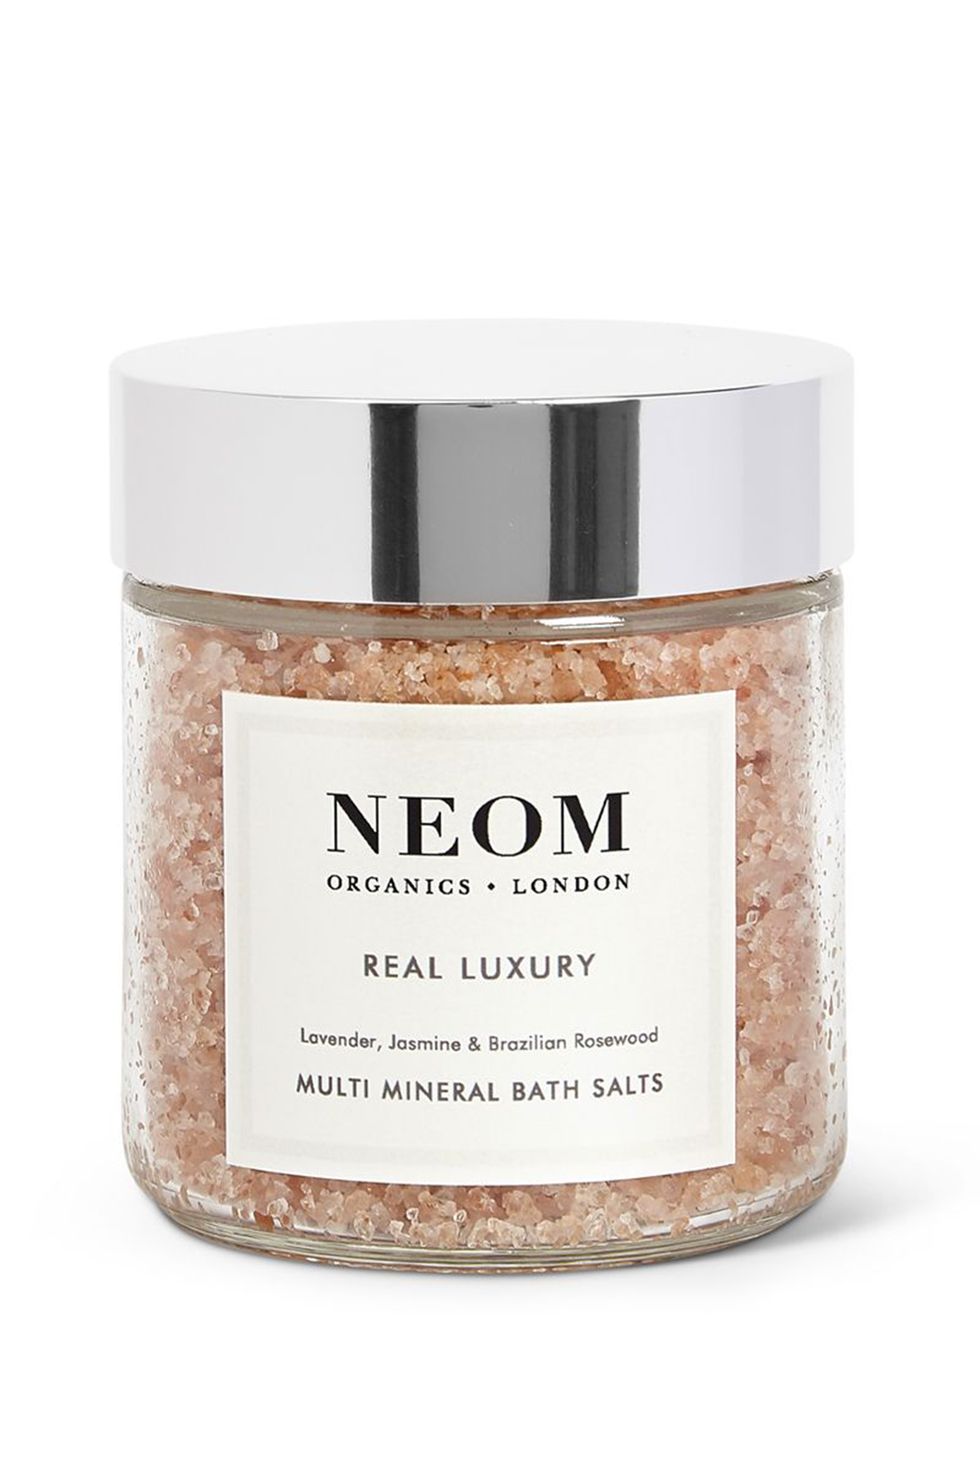 Neom Bath Salts